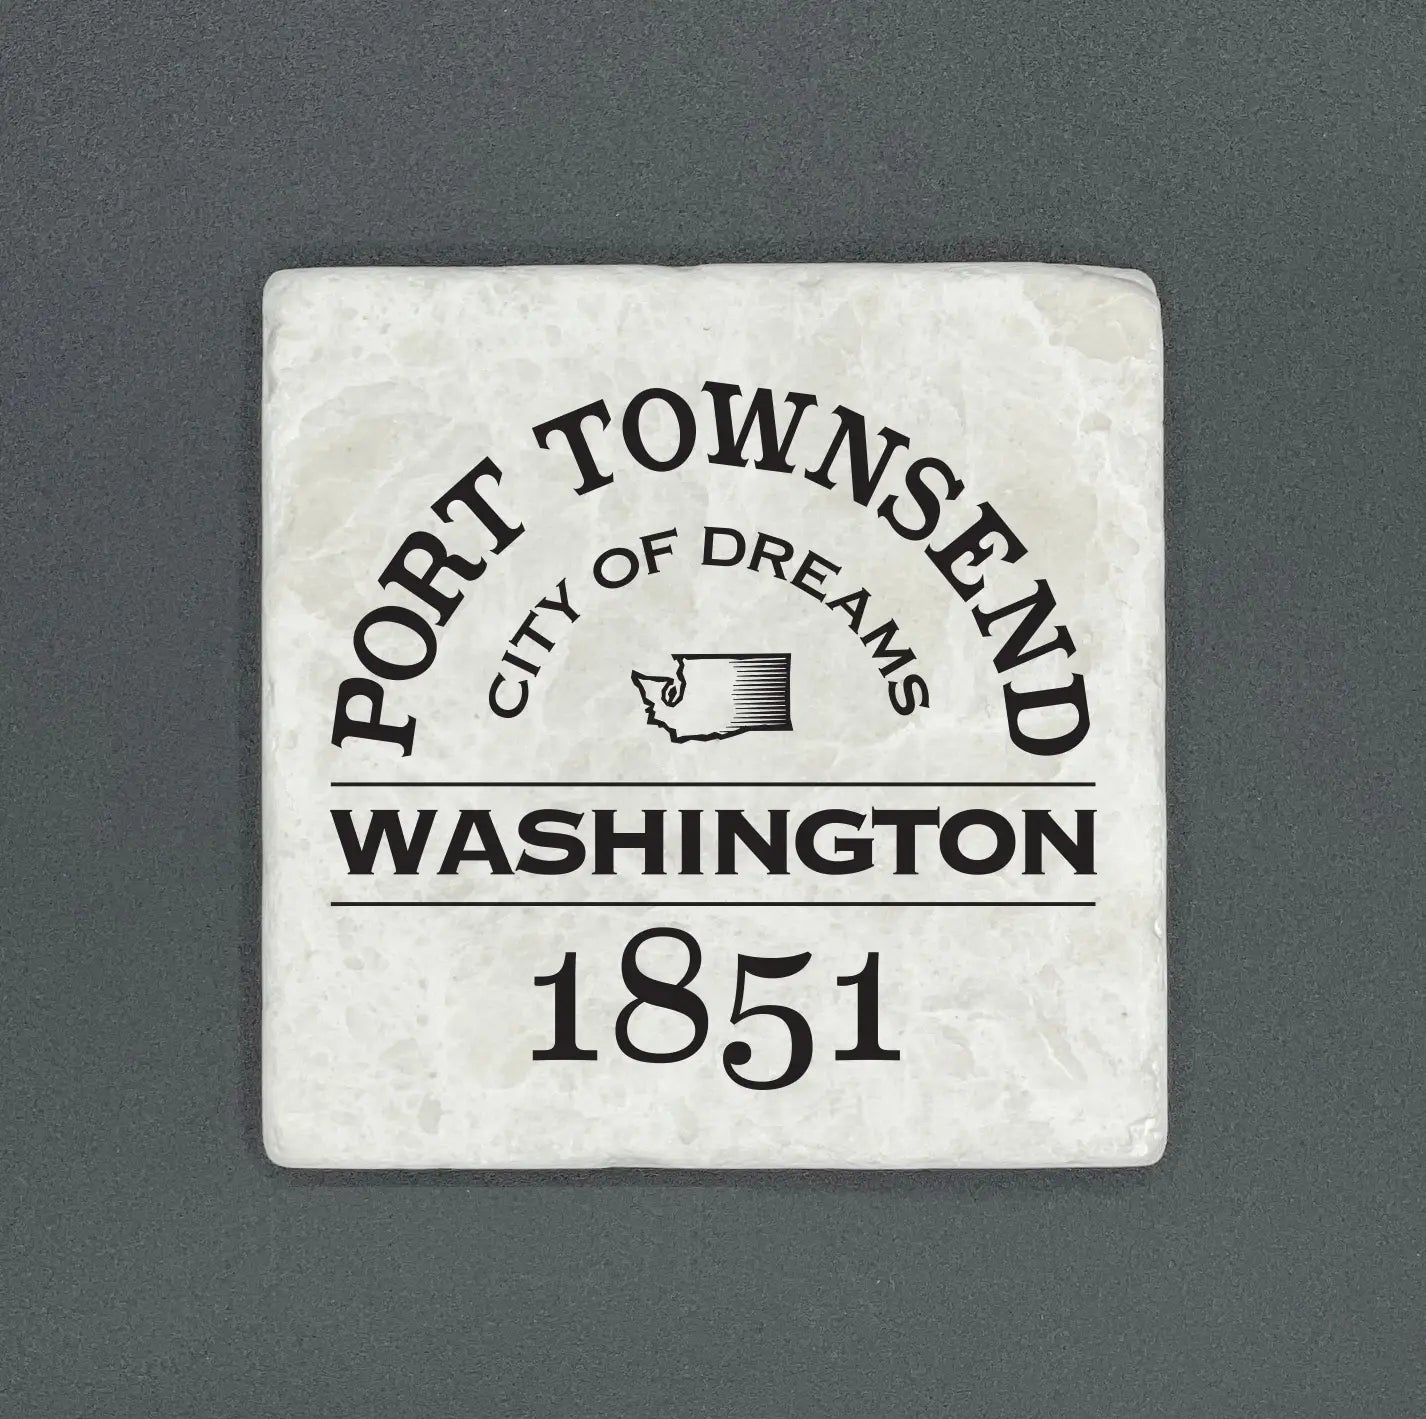 Port Townsend, Washington Marble Tile Coaster